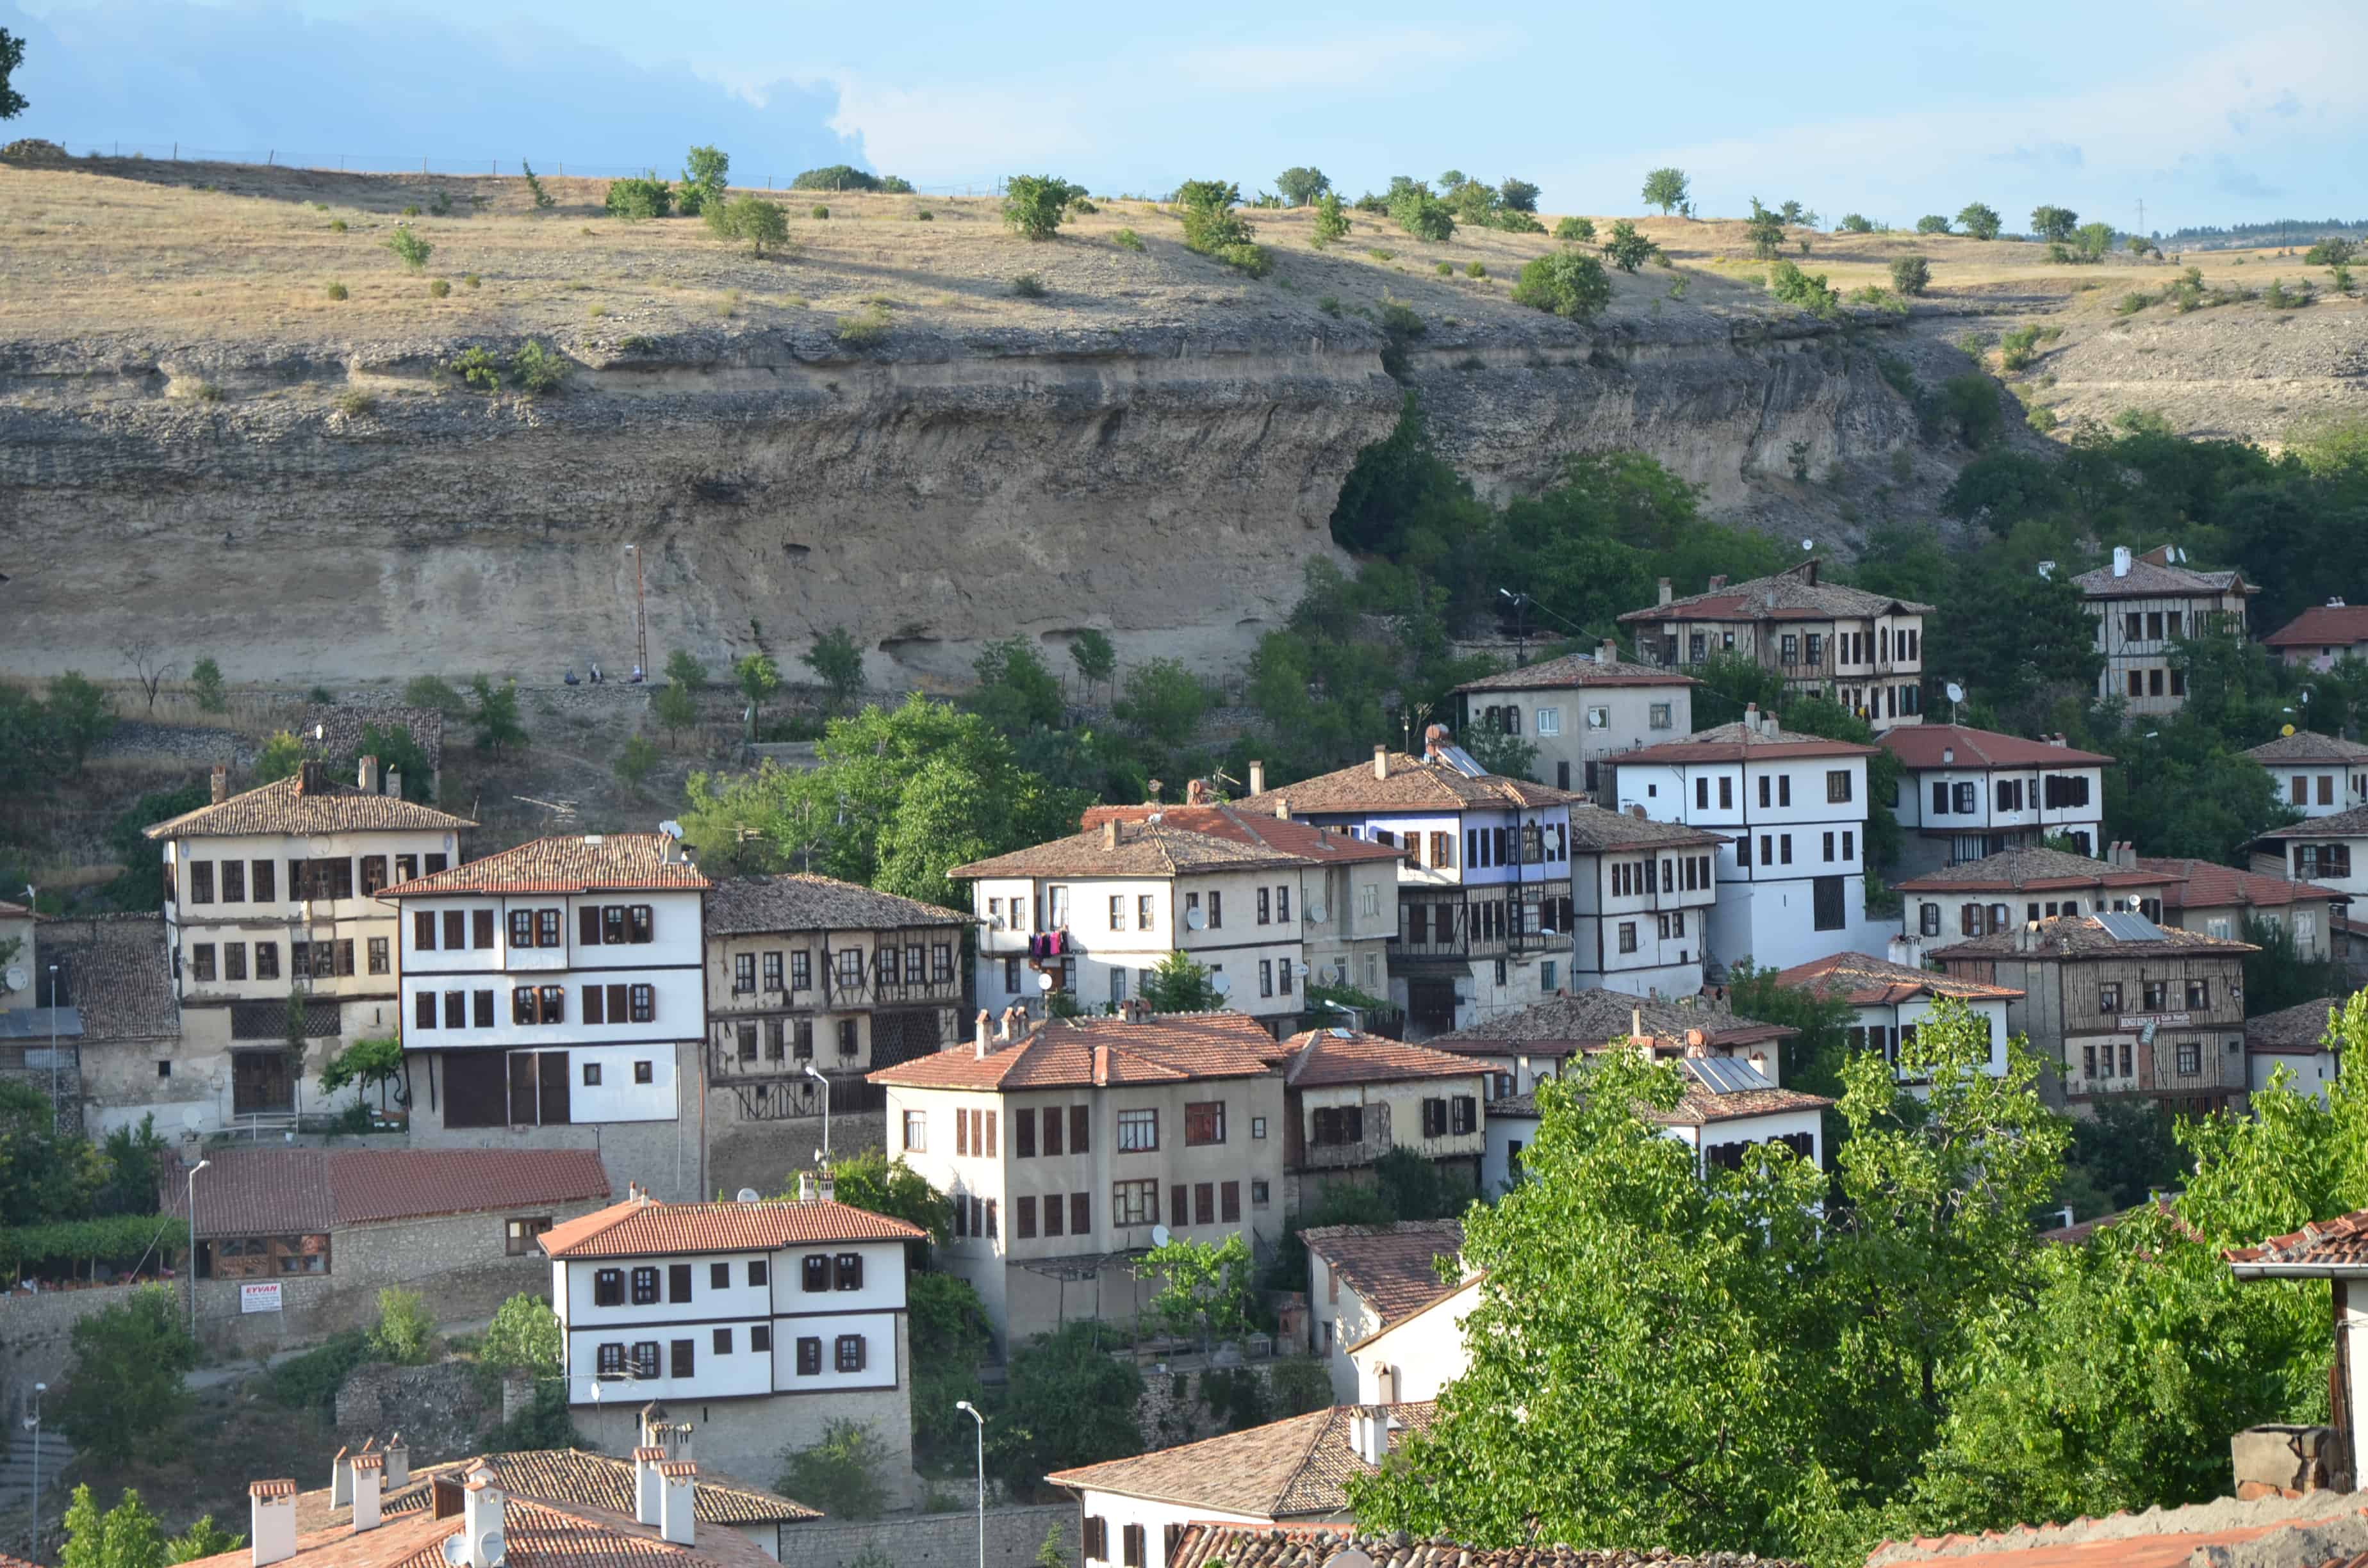 Ottoman homes in Safranbolu from Hıdırlık Hill